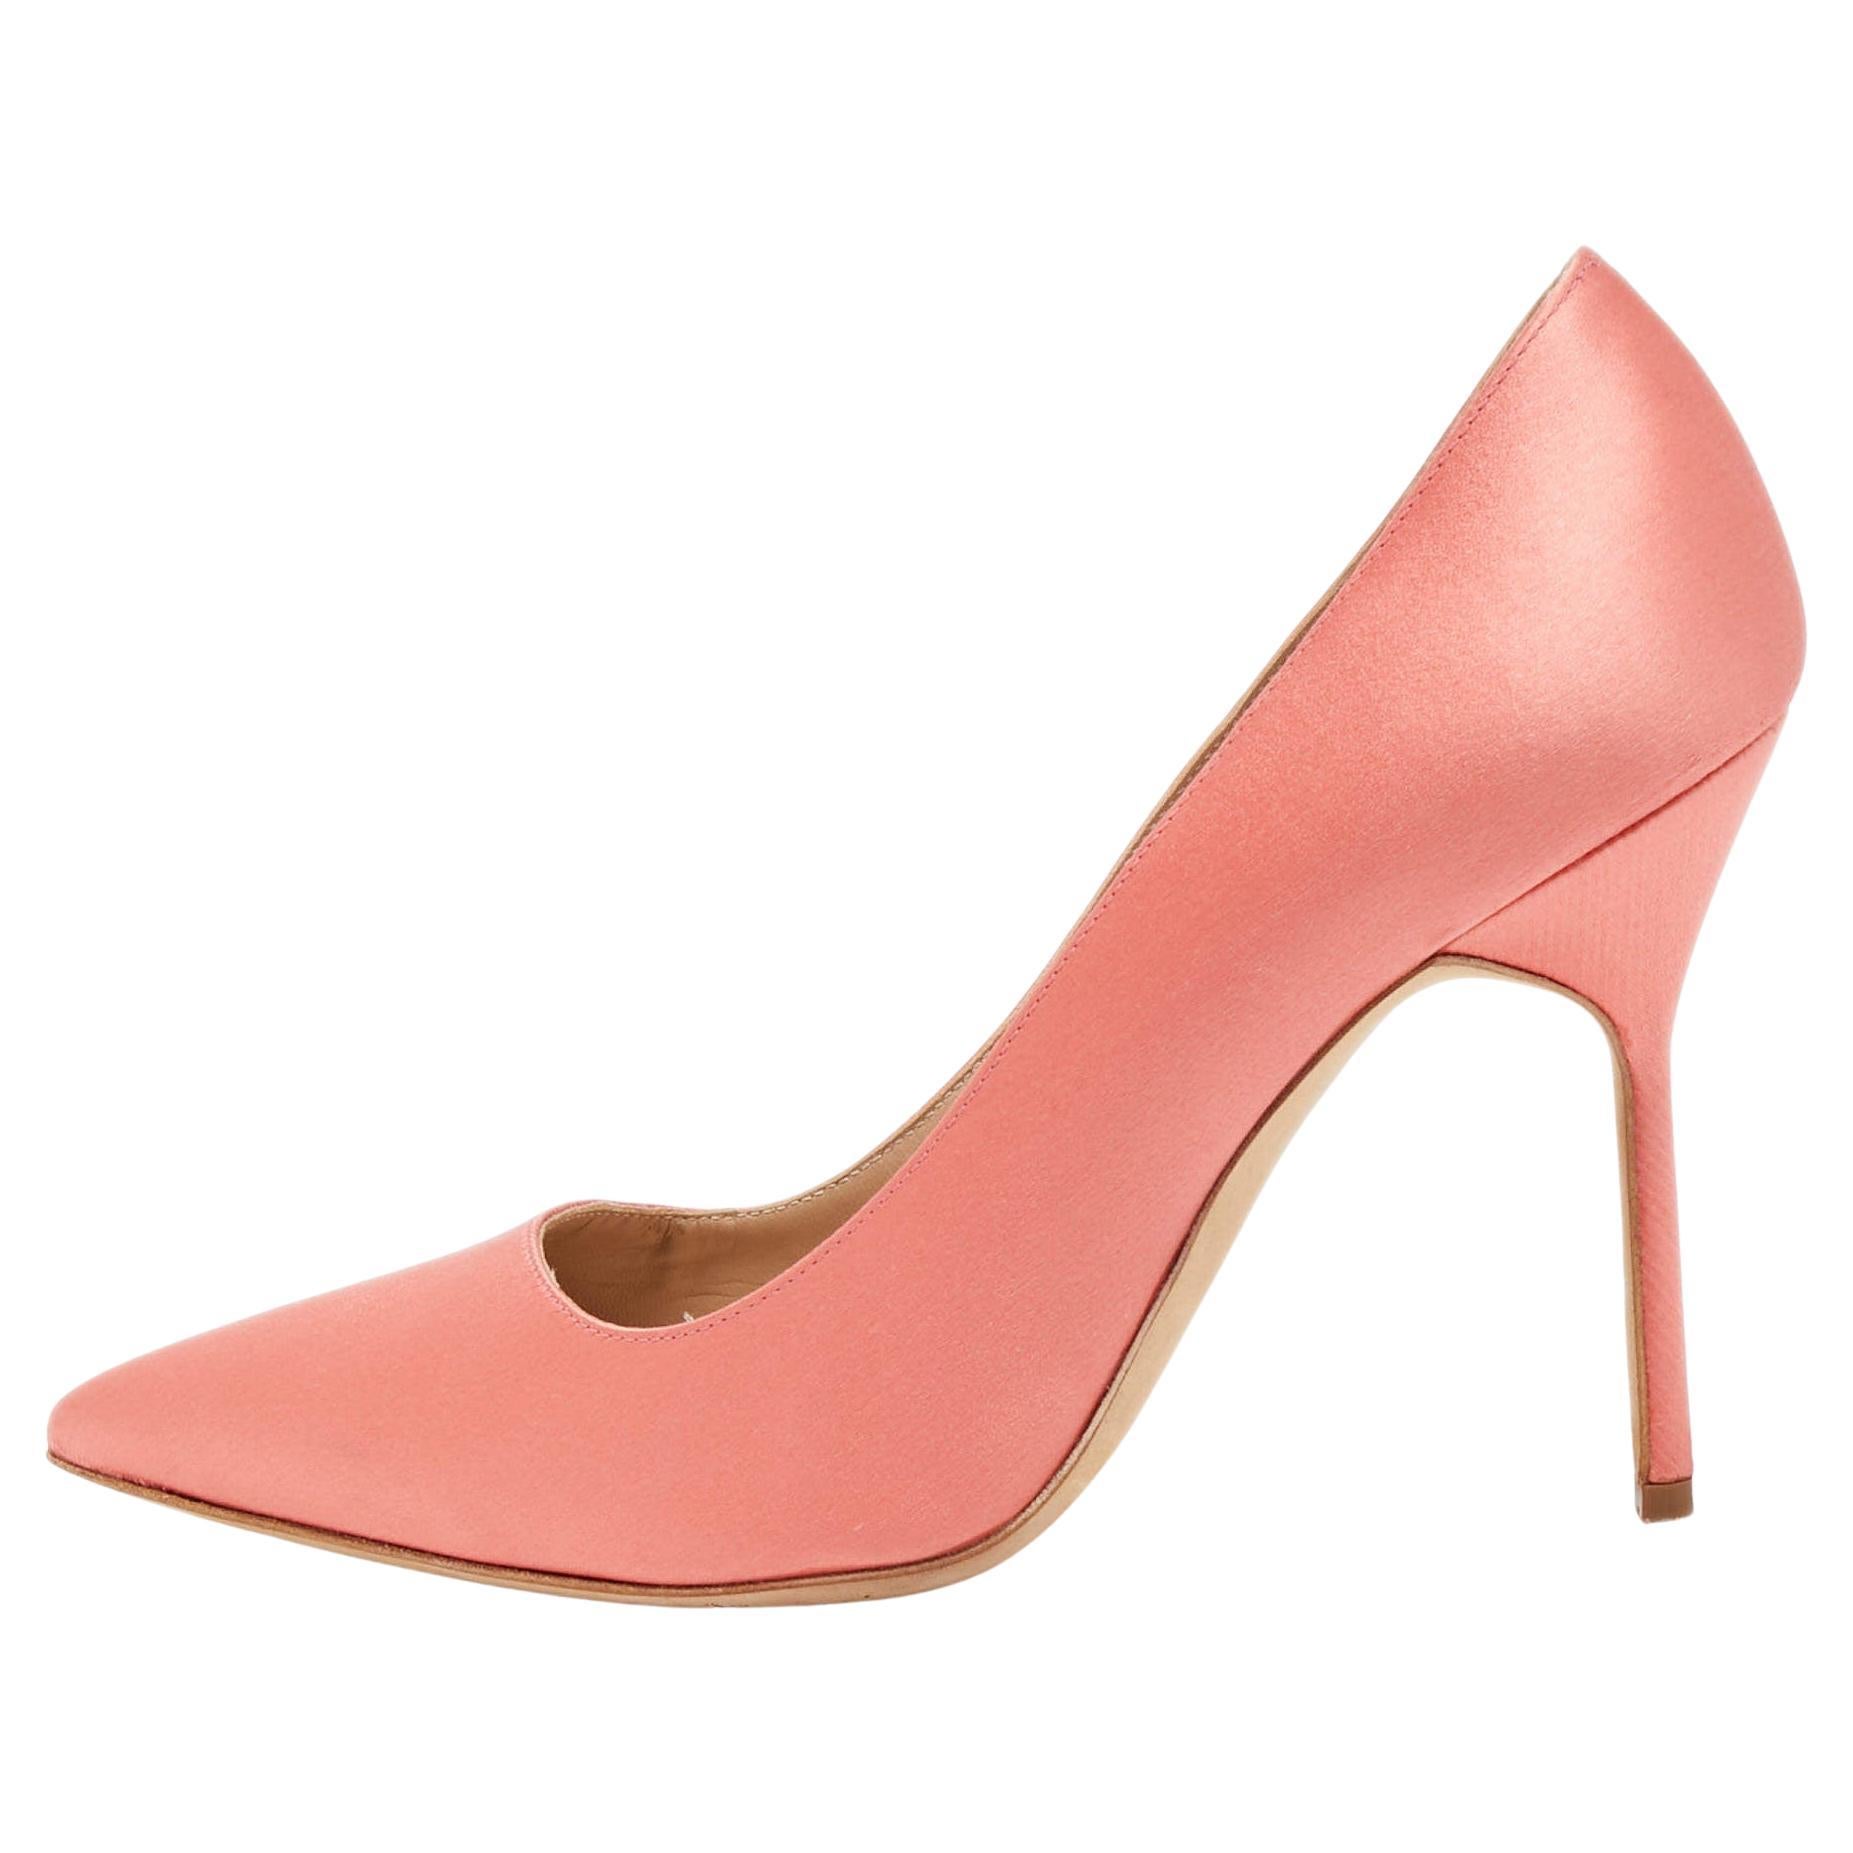 Manolo Blahnik Pink Satin Pointed Toe Pumps Size 37.5